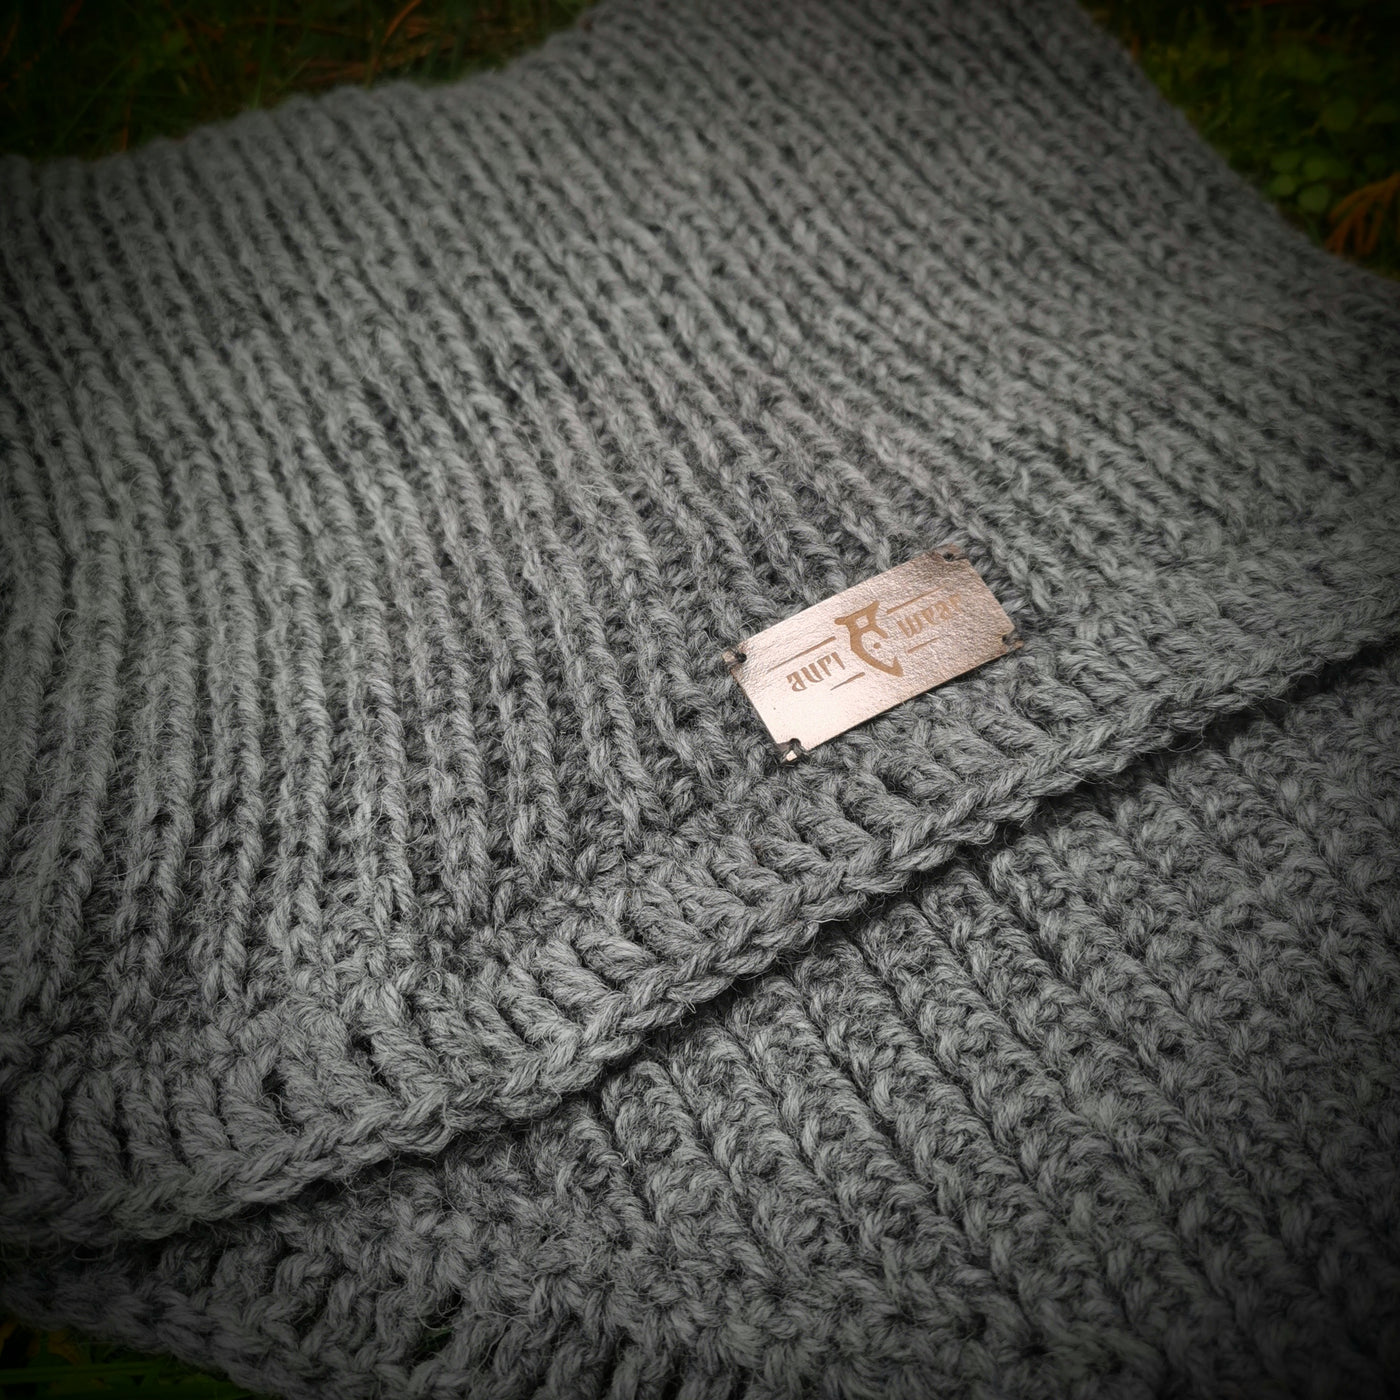 Handmade knitted steel grey cowl